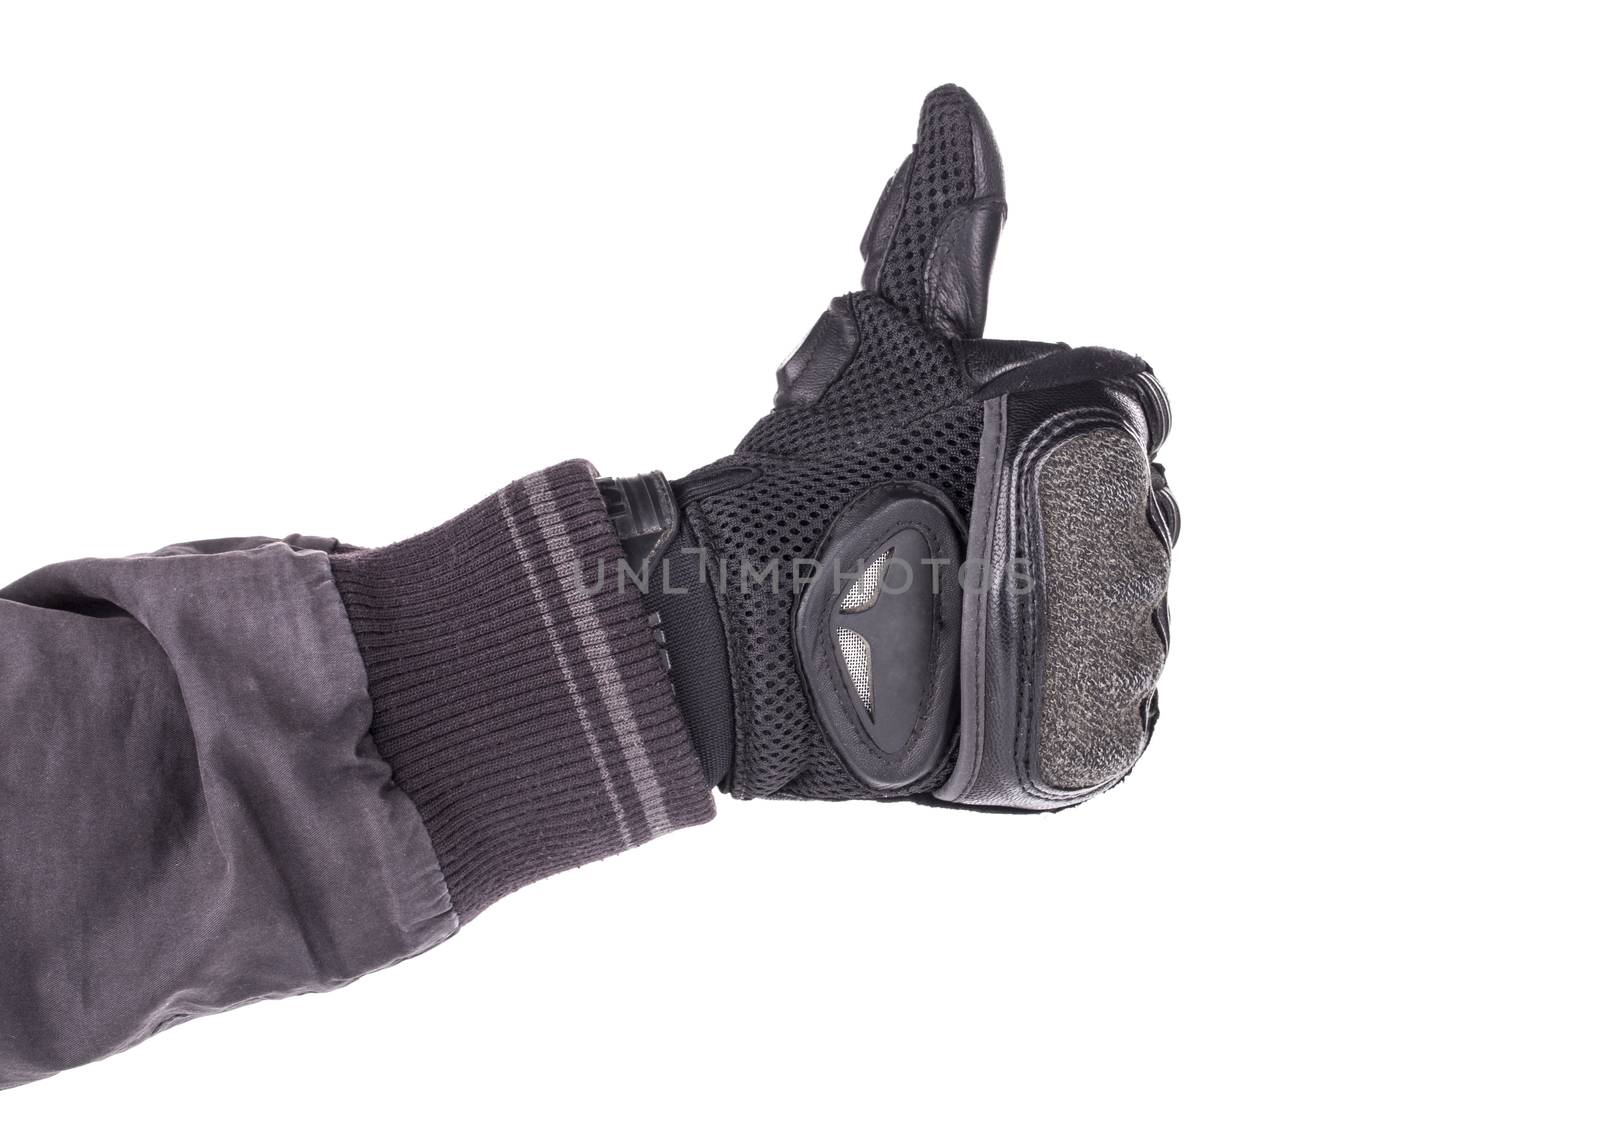 Motorcyclist Protective Gear